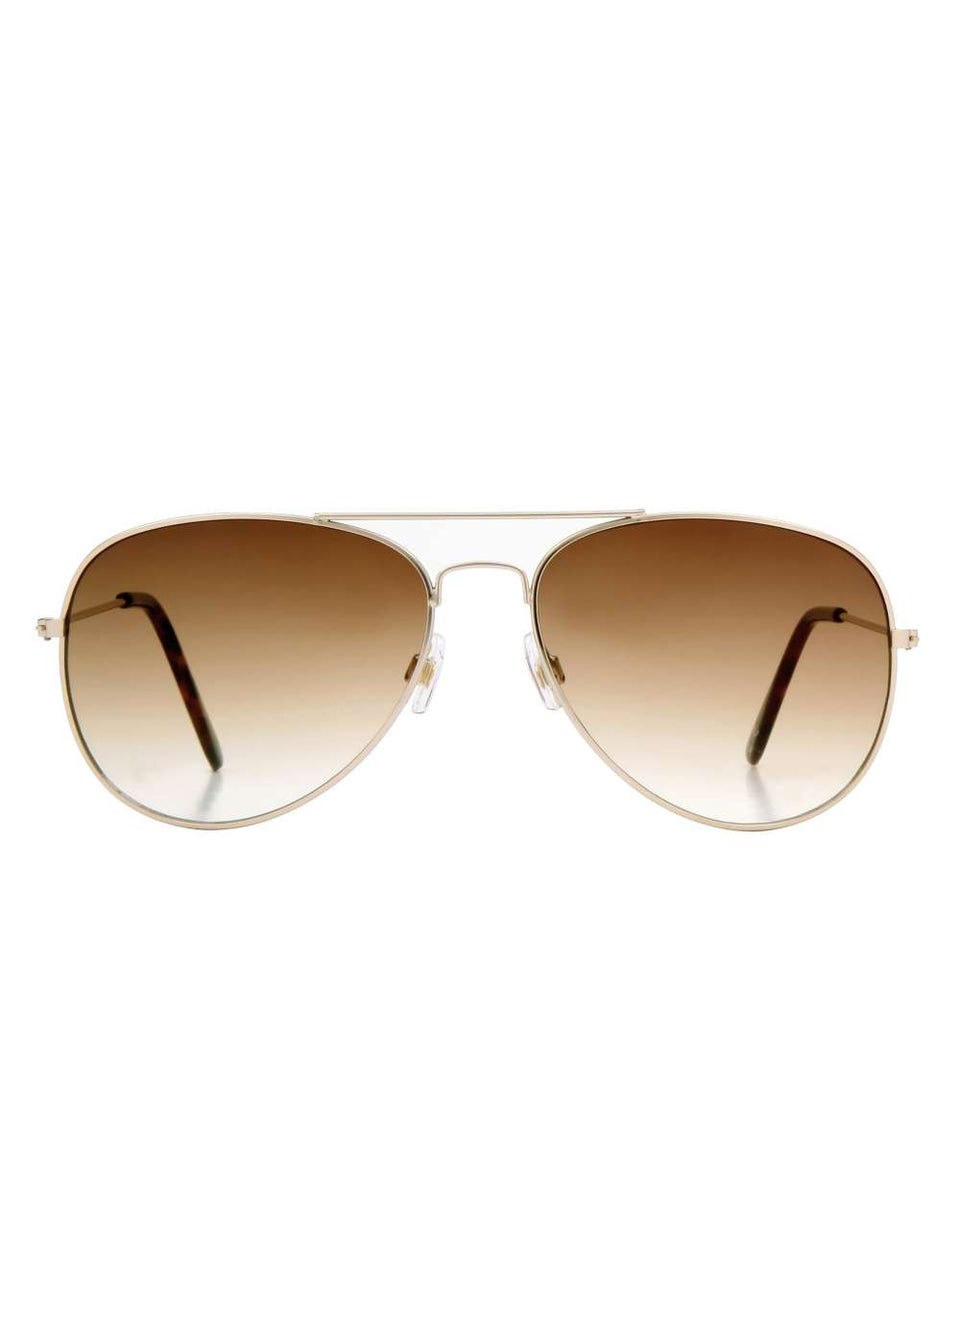 Foster Grant Brown Aviator Sunglasses